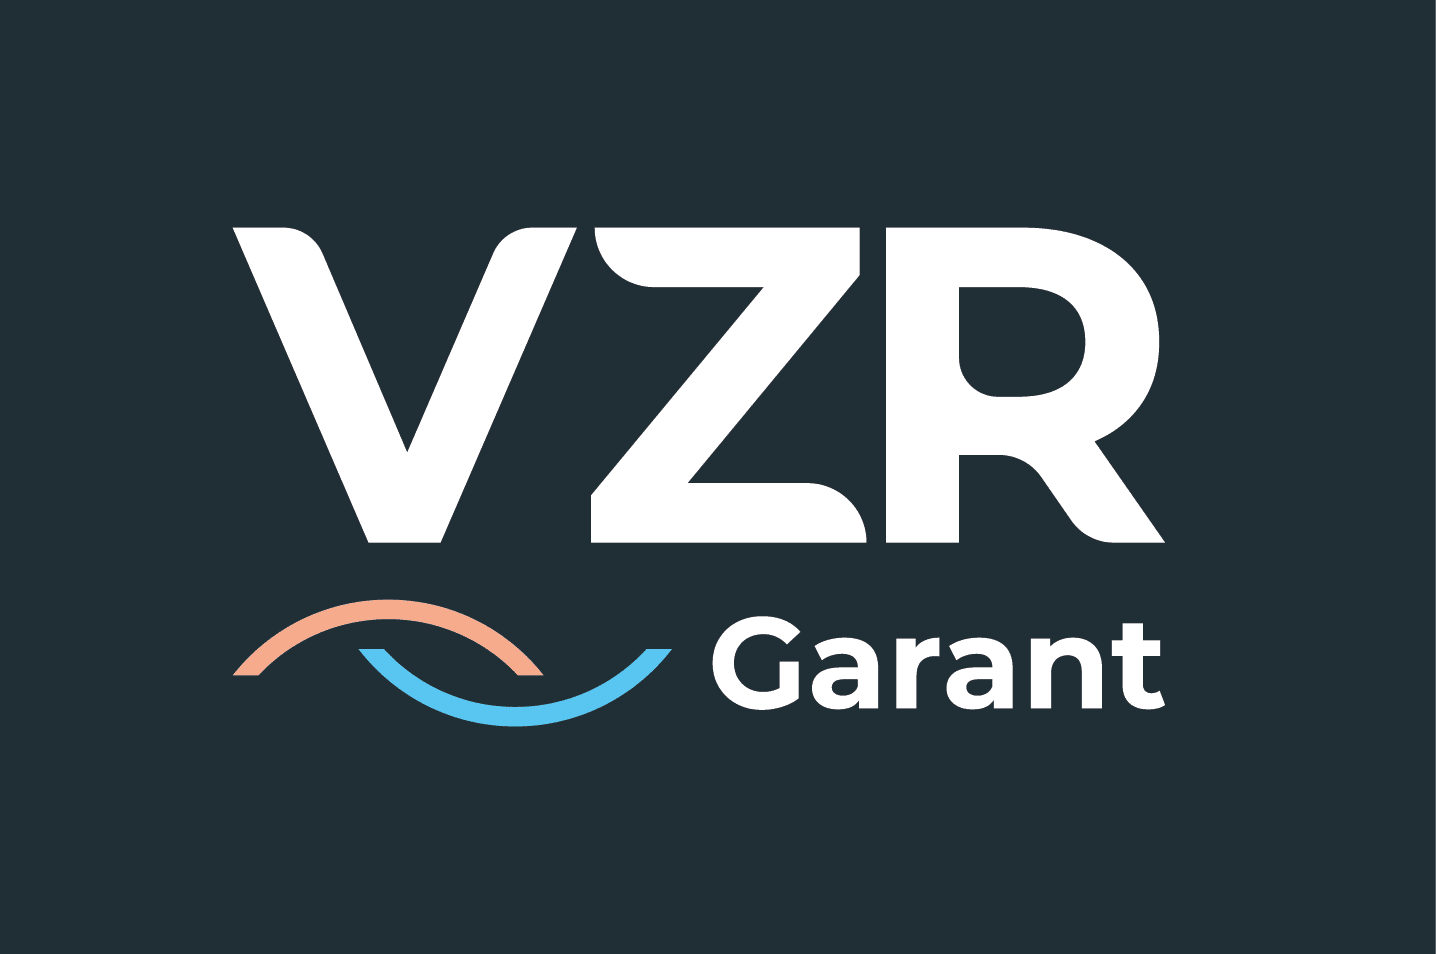 VZR Garantiefonds logo representing financial protection for travelers